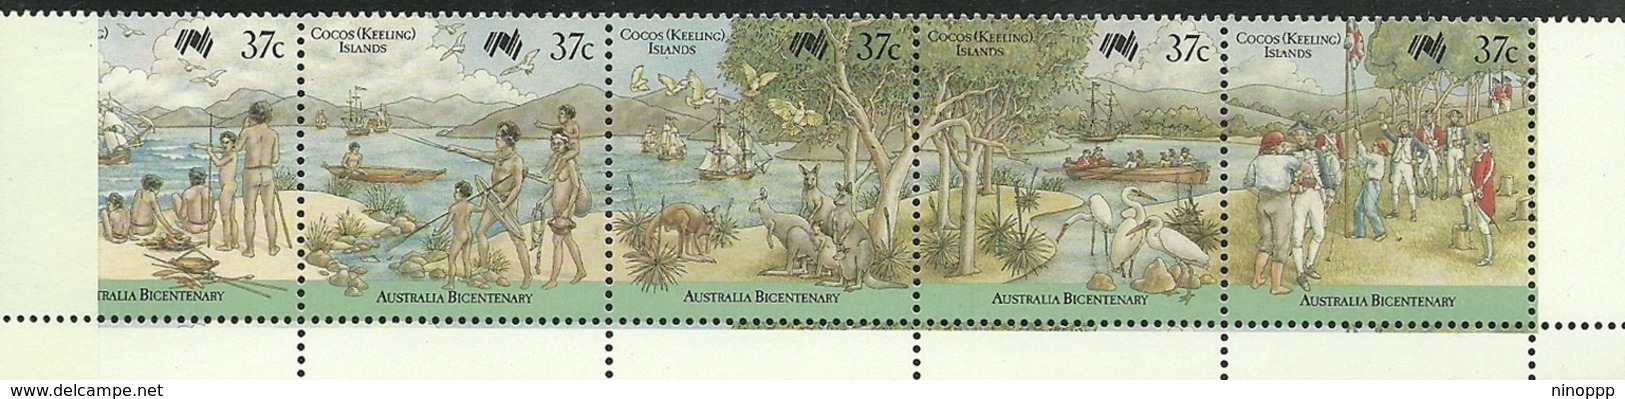 Cocos (Keeling) Islands SG 175-179 1988 Australia Bicentenary MNH - Islas Cocos (Keeling)